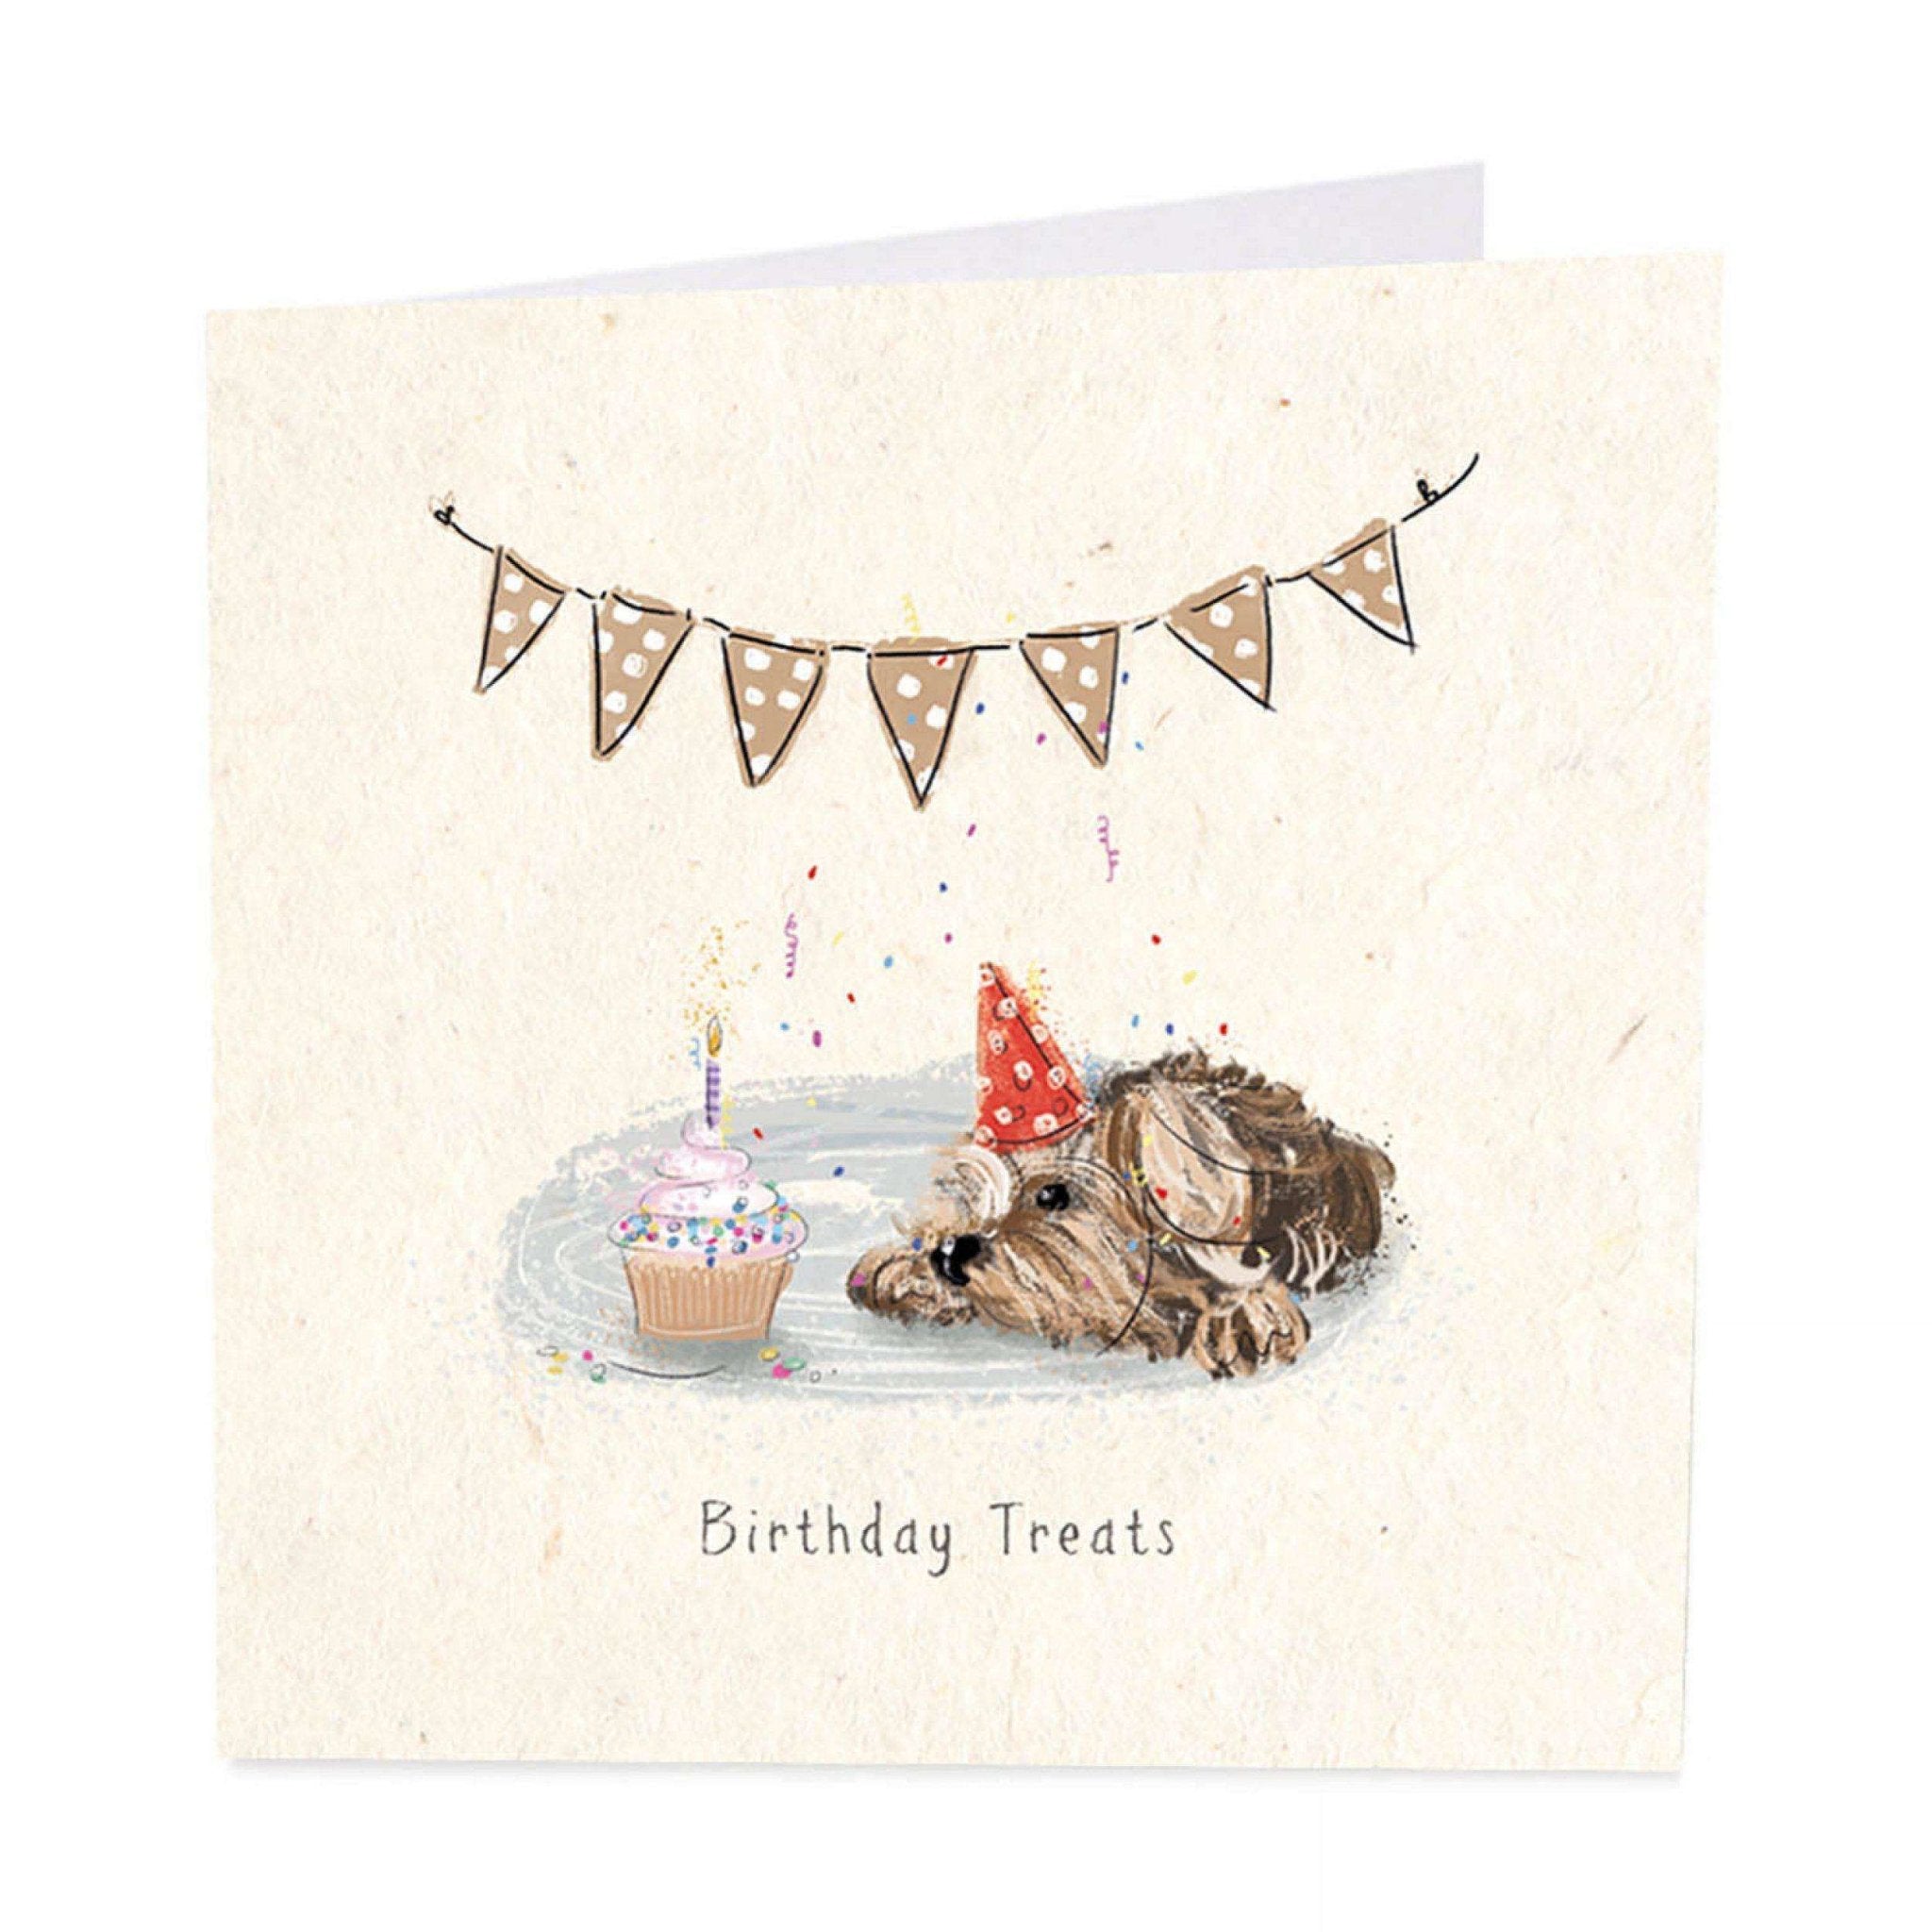 Stay Birthday Treats Birthday Card - Duck Barn Interiors